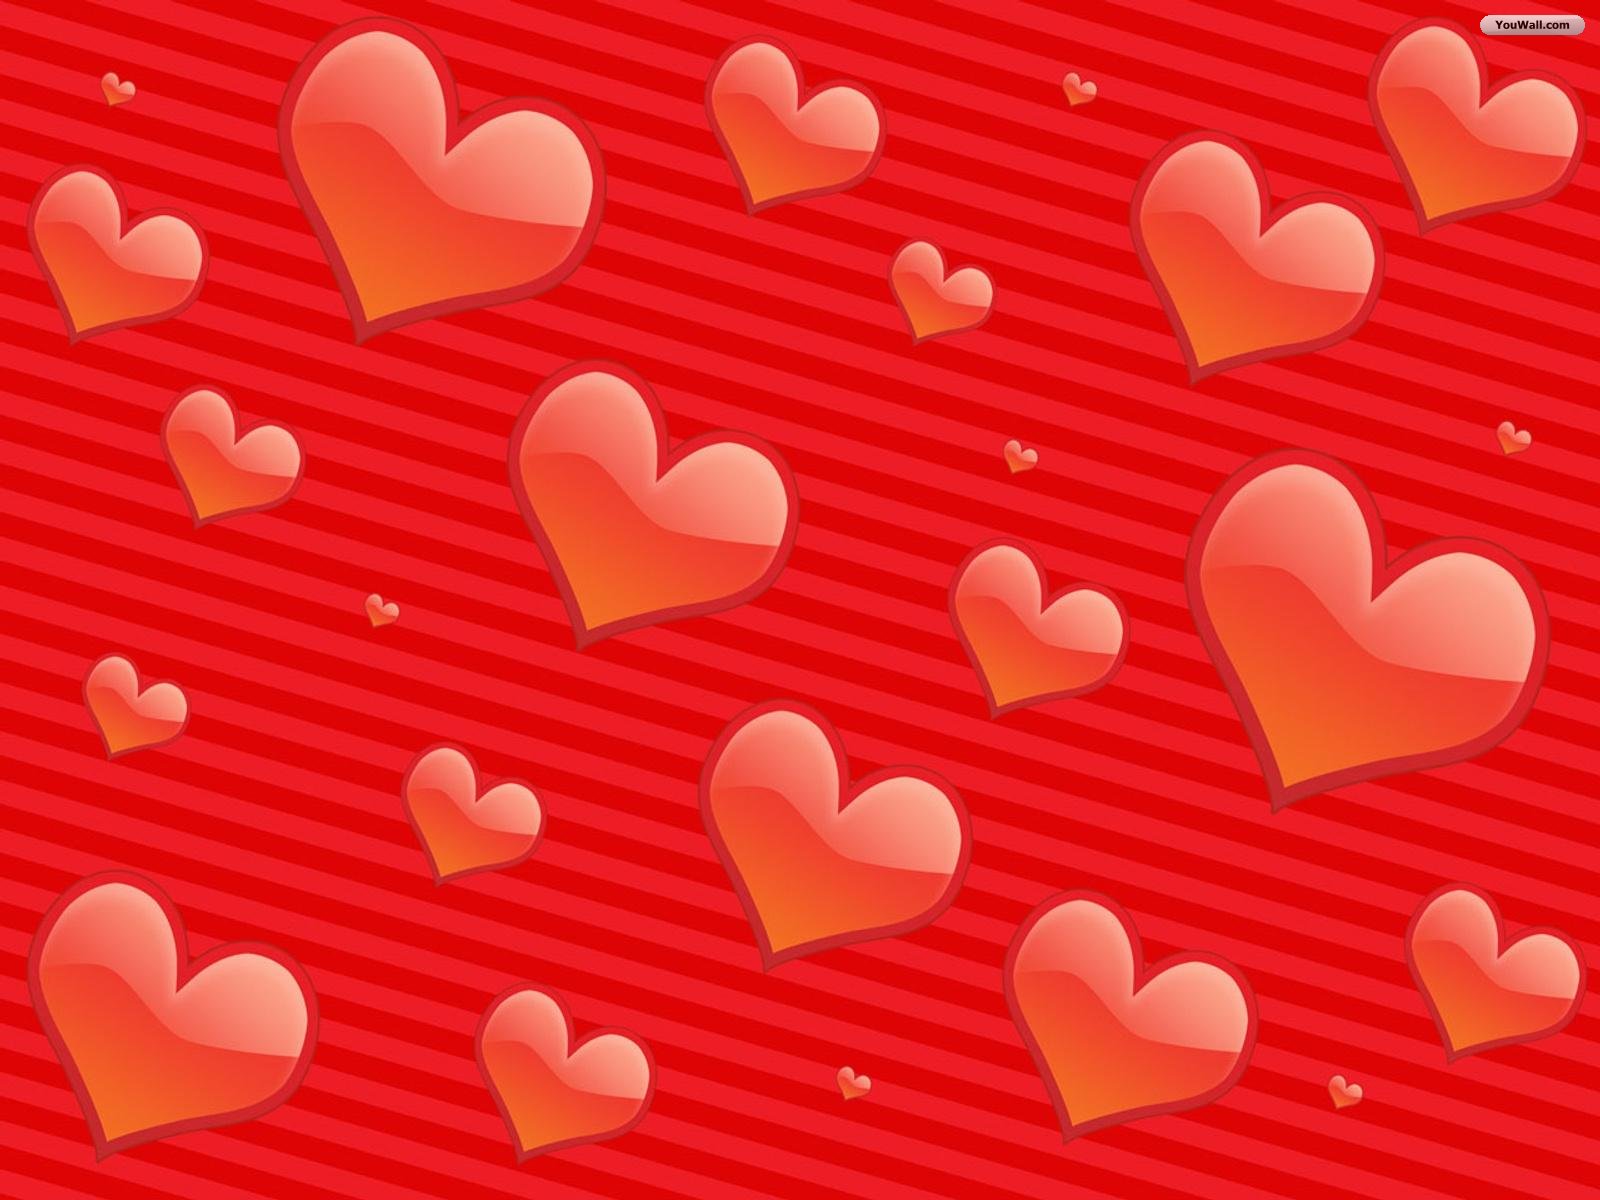 YouWall - Love Hearts Wallpaper - wallpaper,wallpapers,free ...